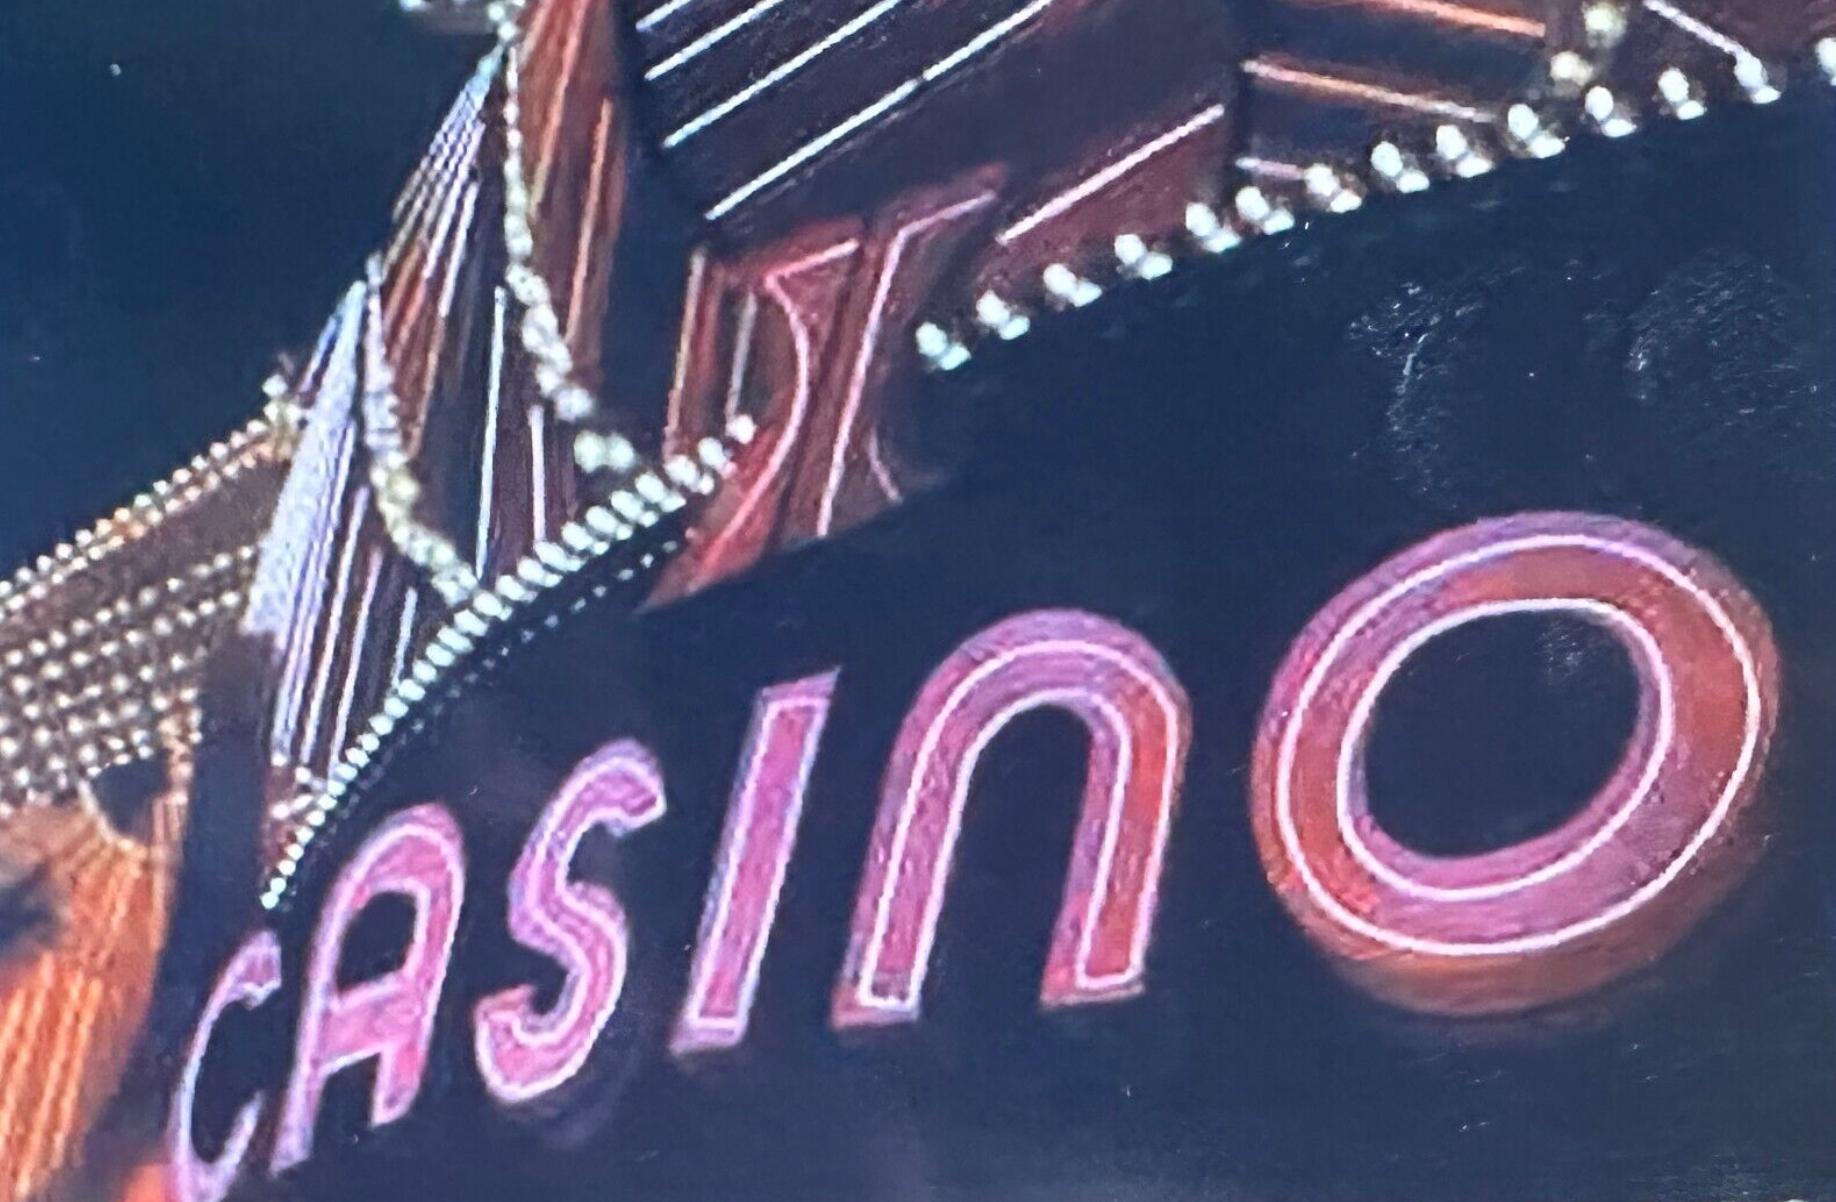 Casino - Original Oil Painting by Renowned Photorealist Mark Schiff 2